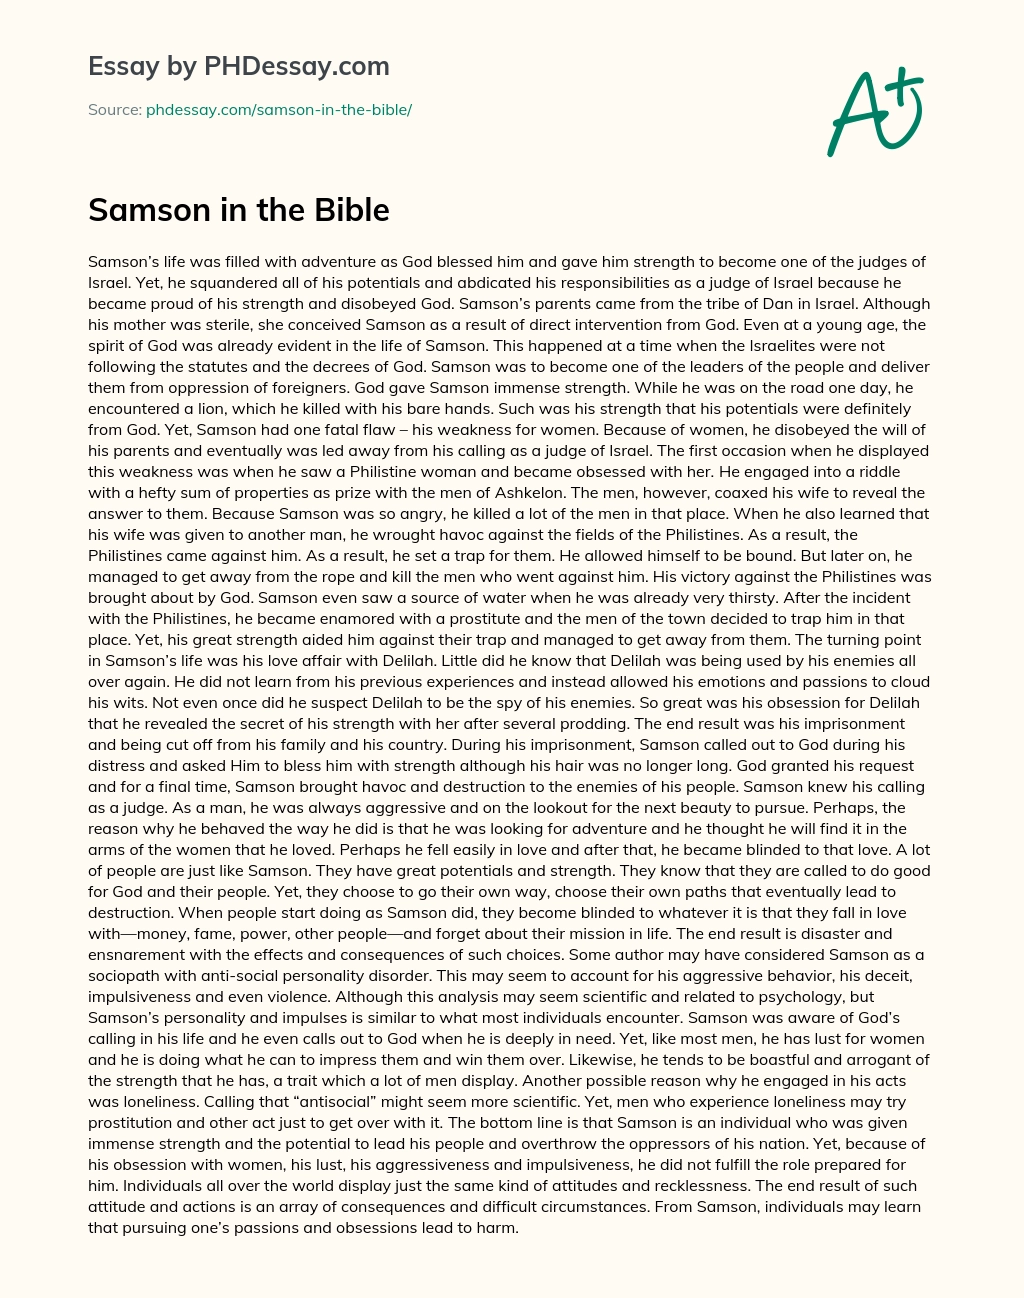 Samson in the Bible essay